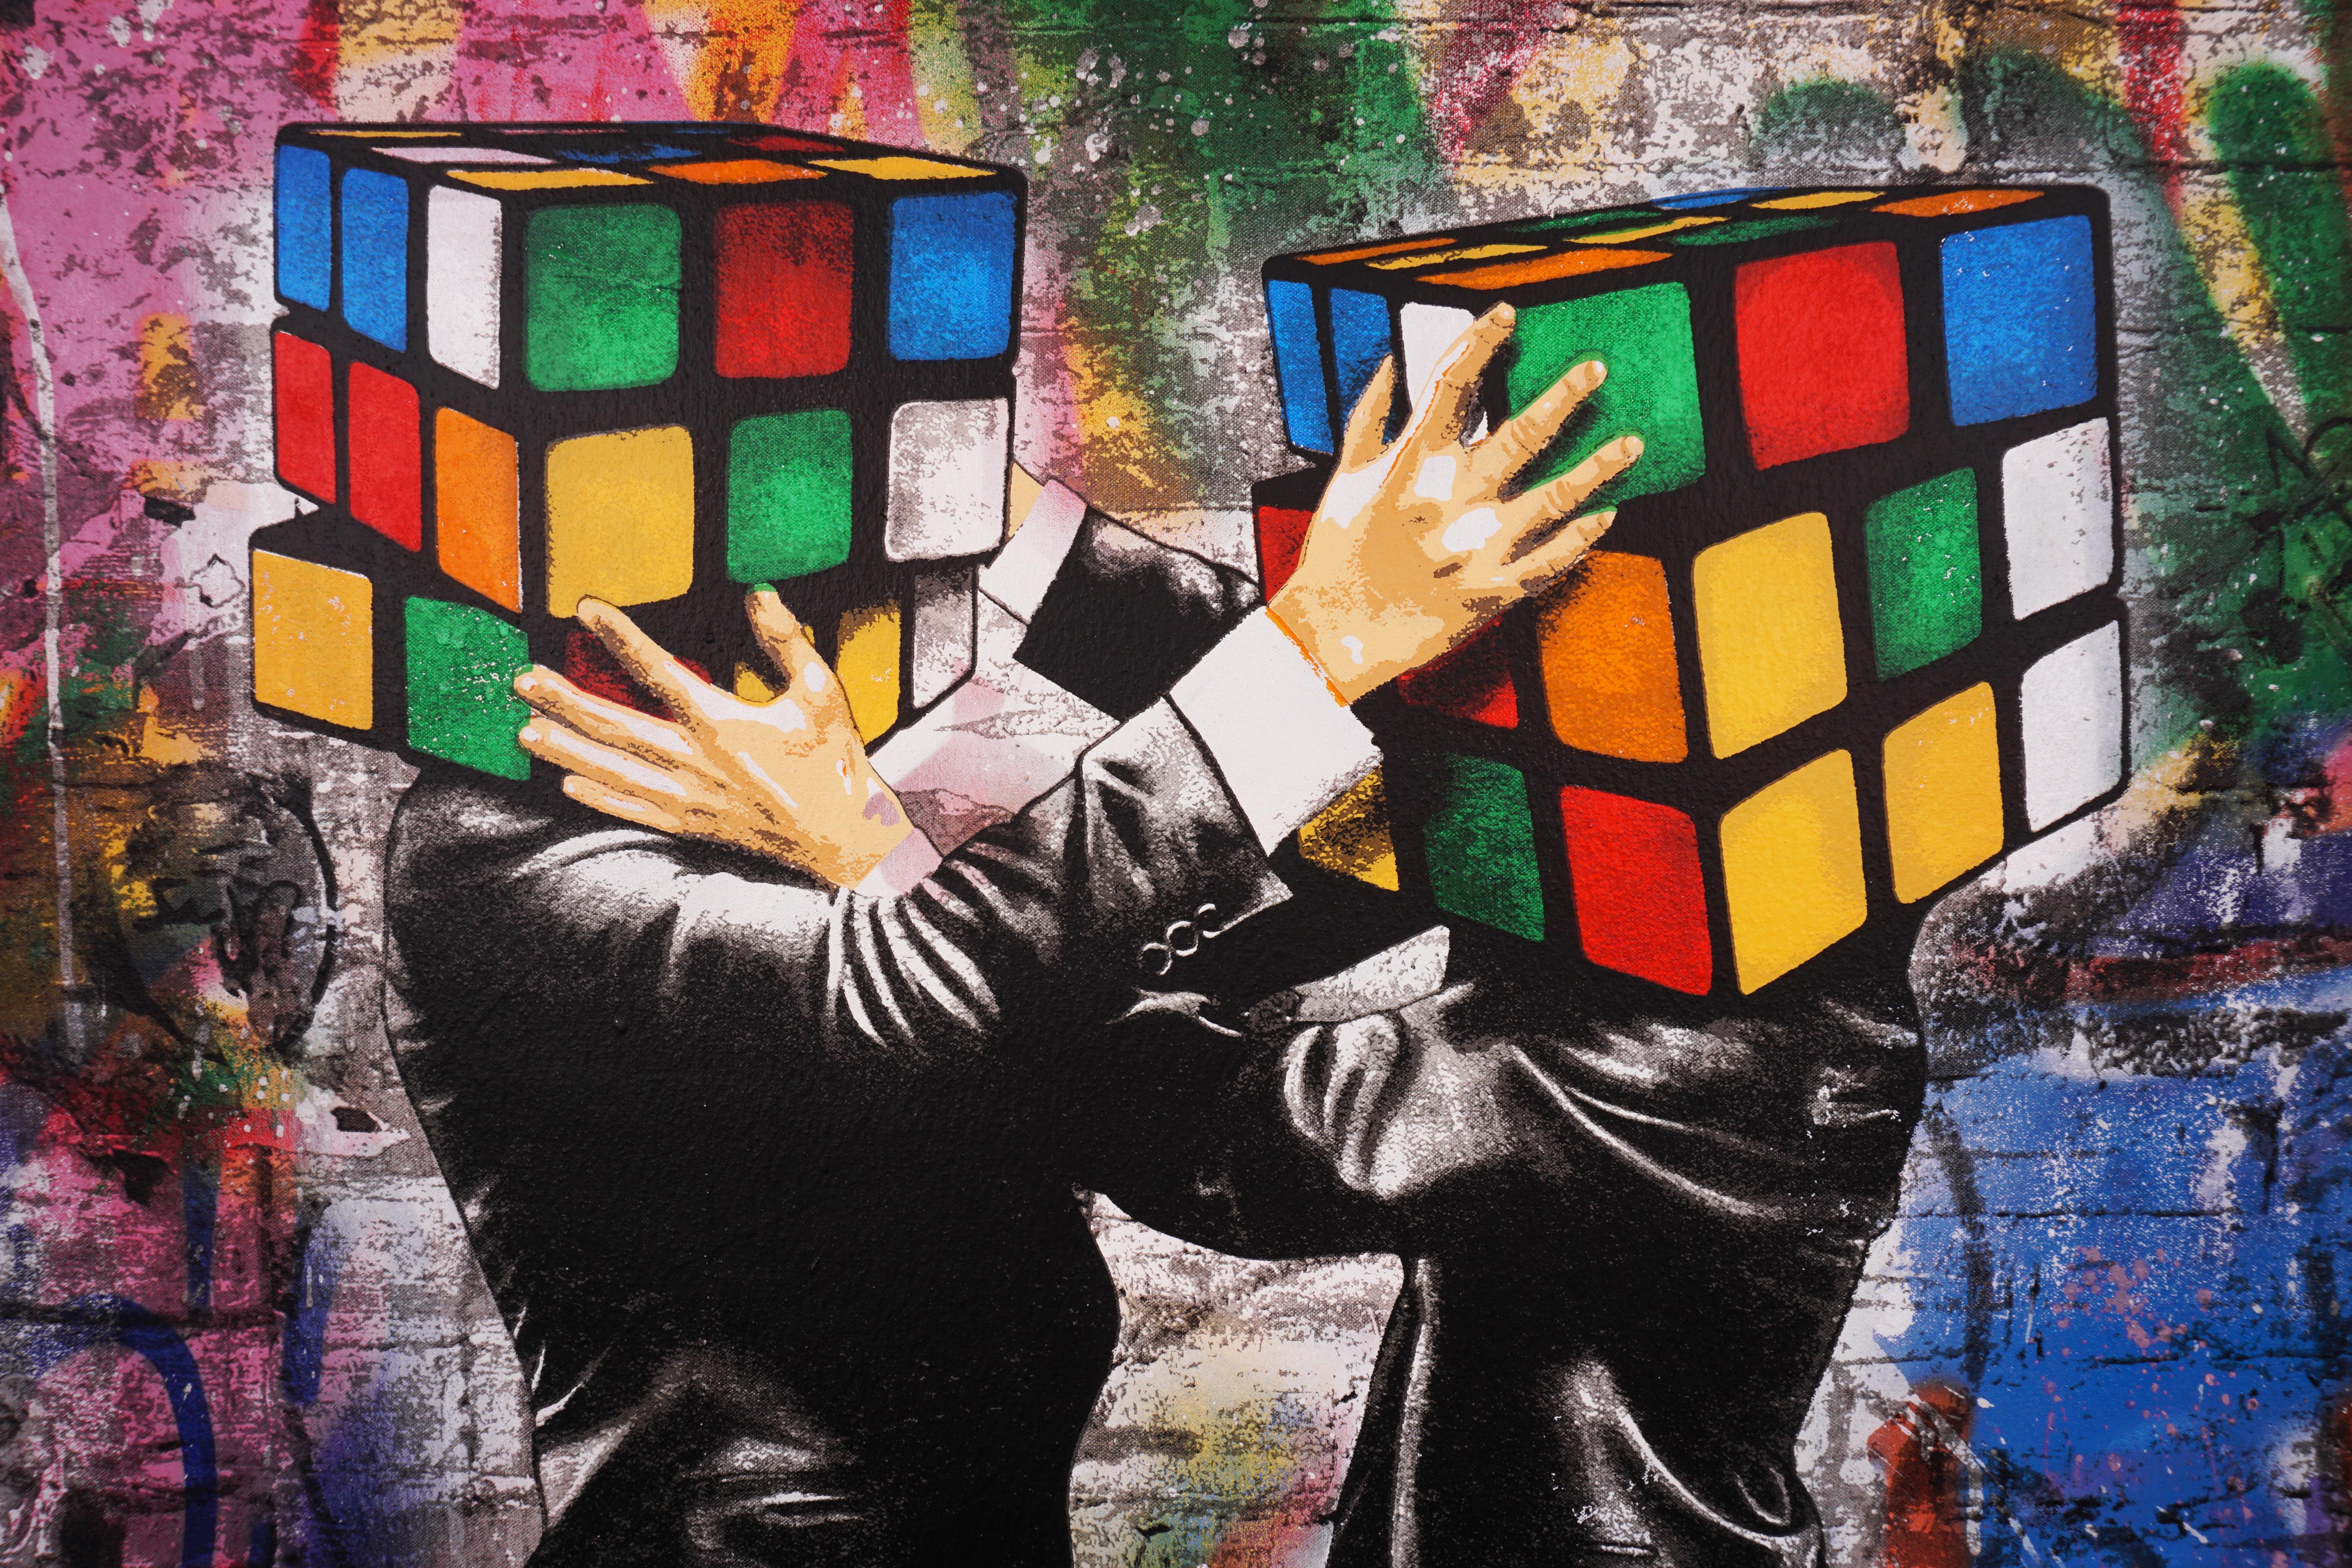 Hijack, 'Puzzled IV' Street Pop Art on Canvas, 2020 2